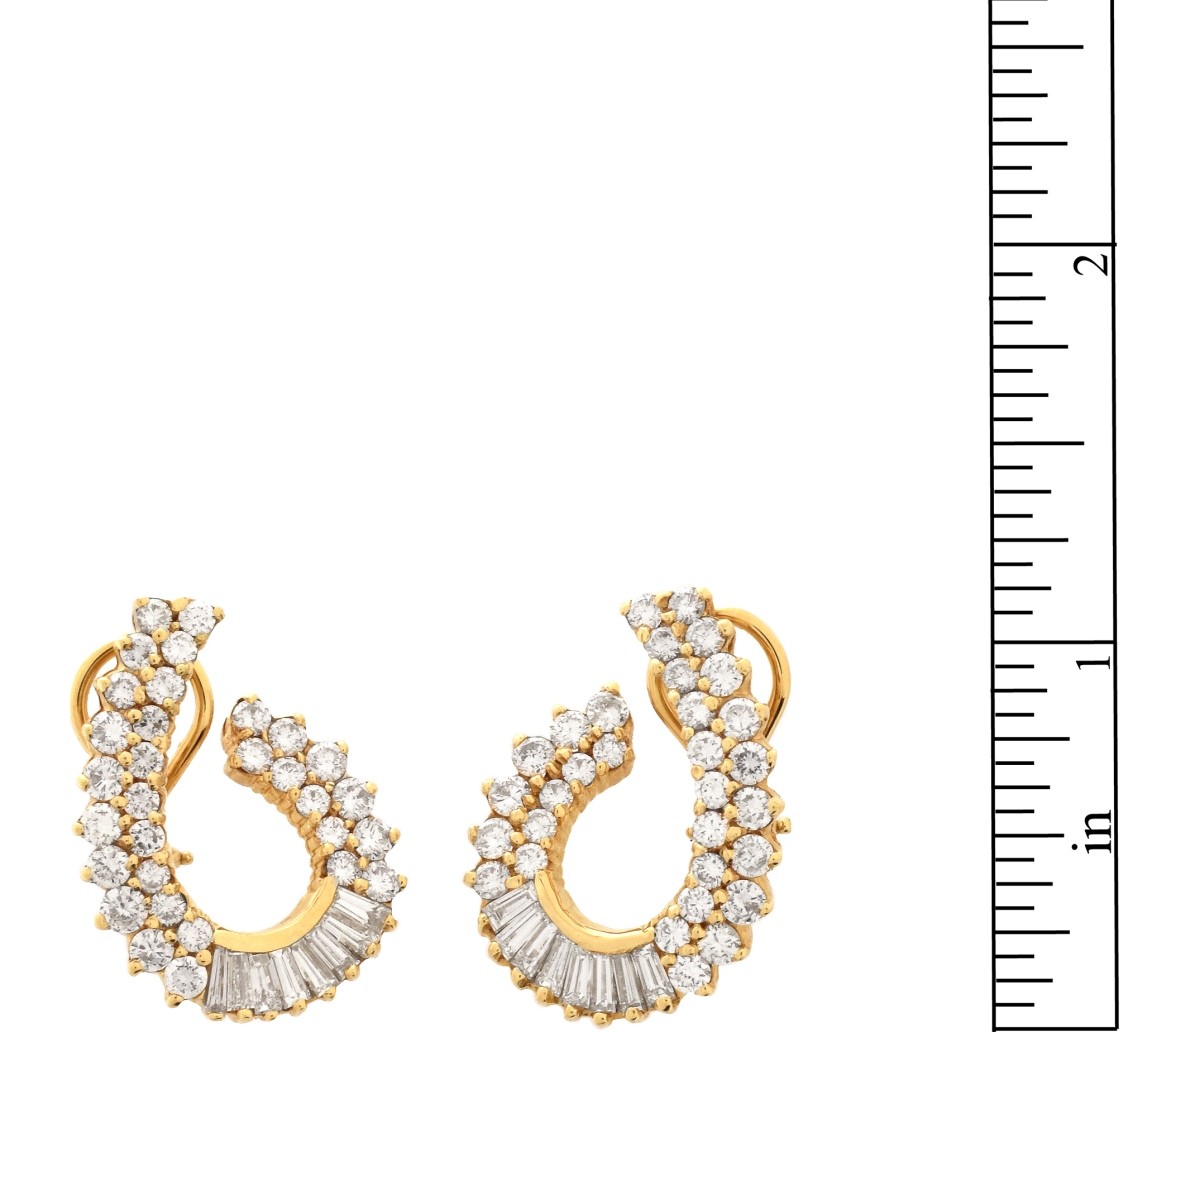 Diamond and 14K Earrings.